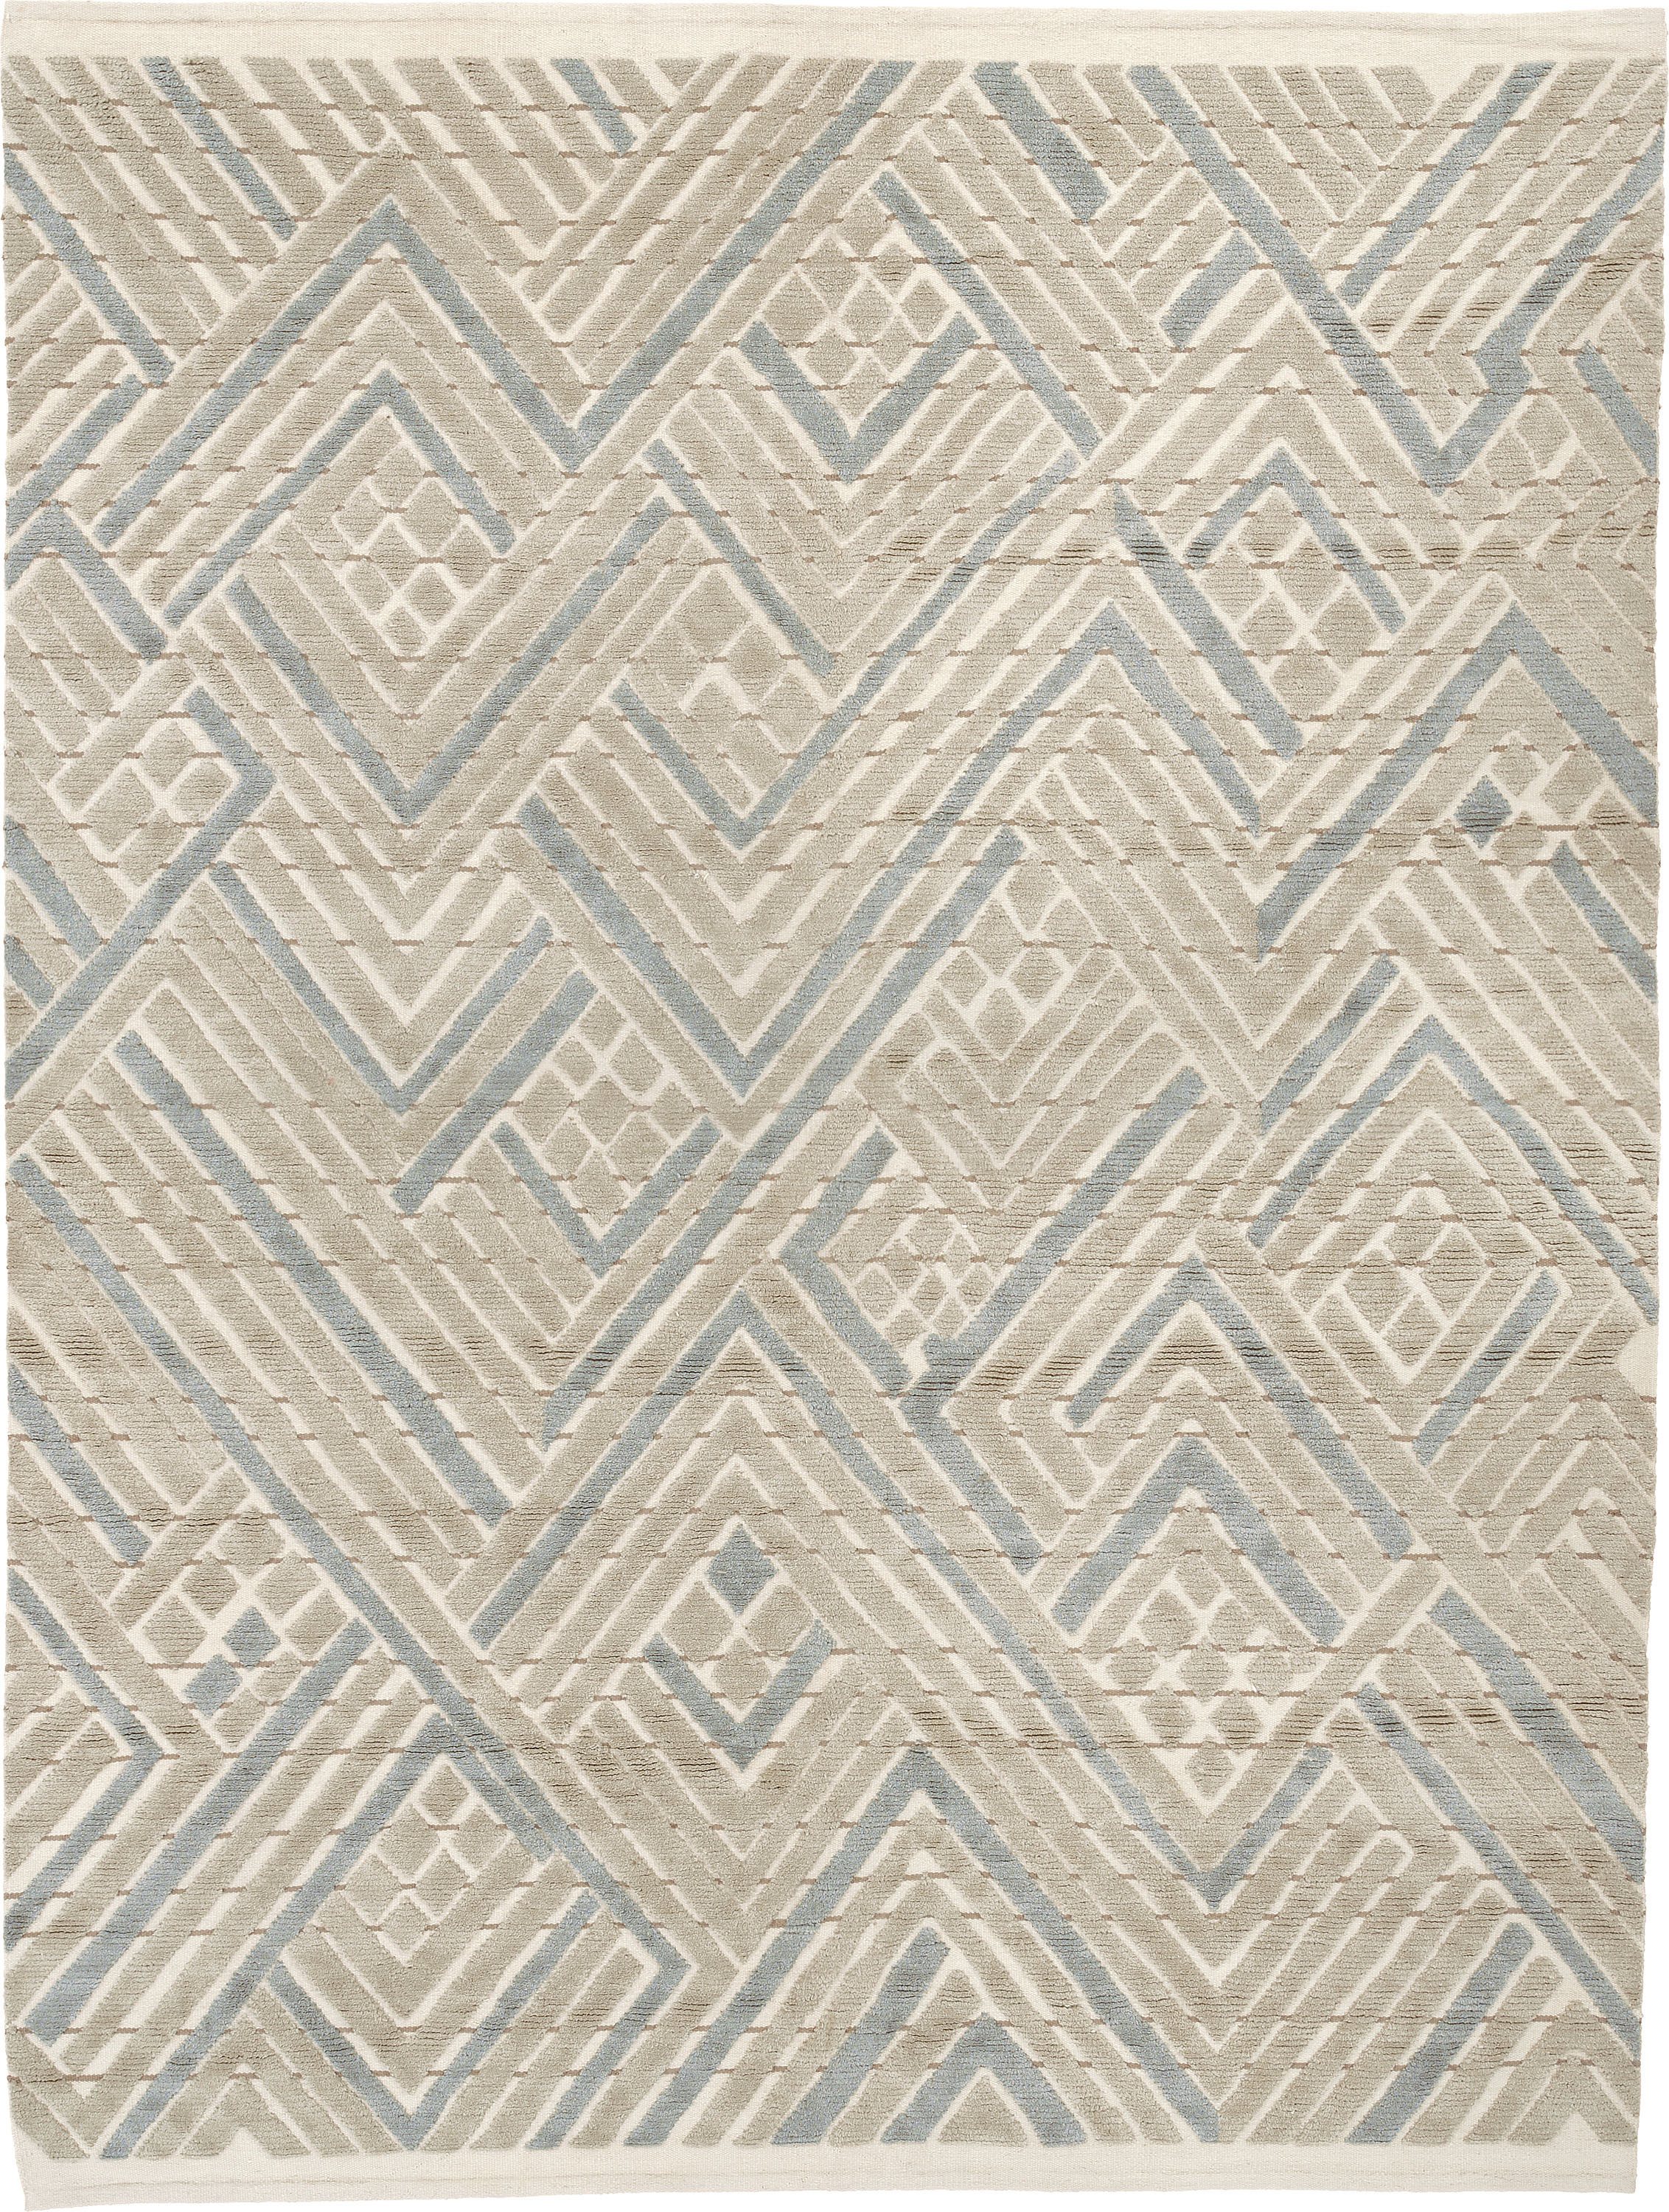 Romb Design | Custom Swedish Carpet | FJ Hakimian | Carpet Gallery in NY